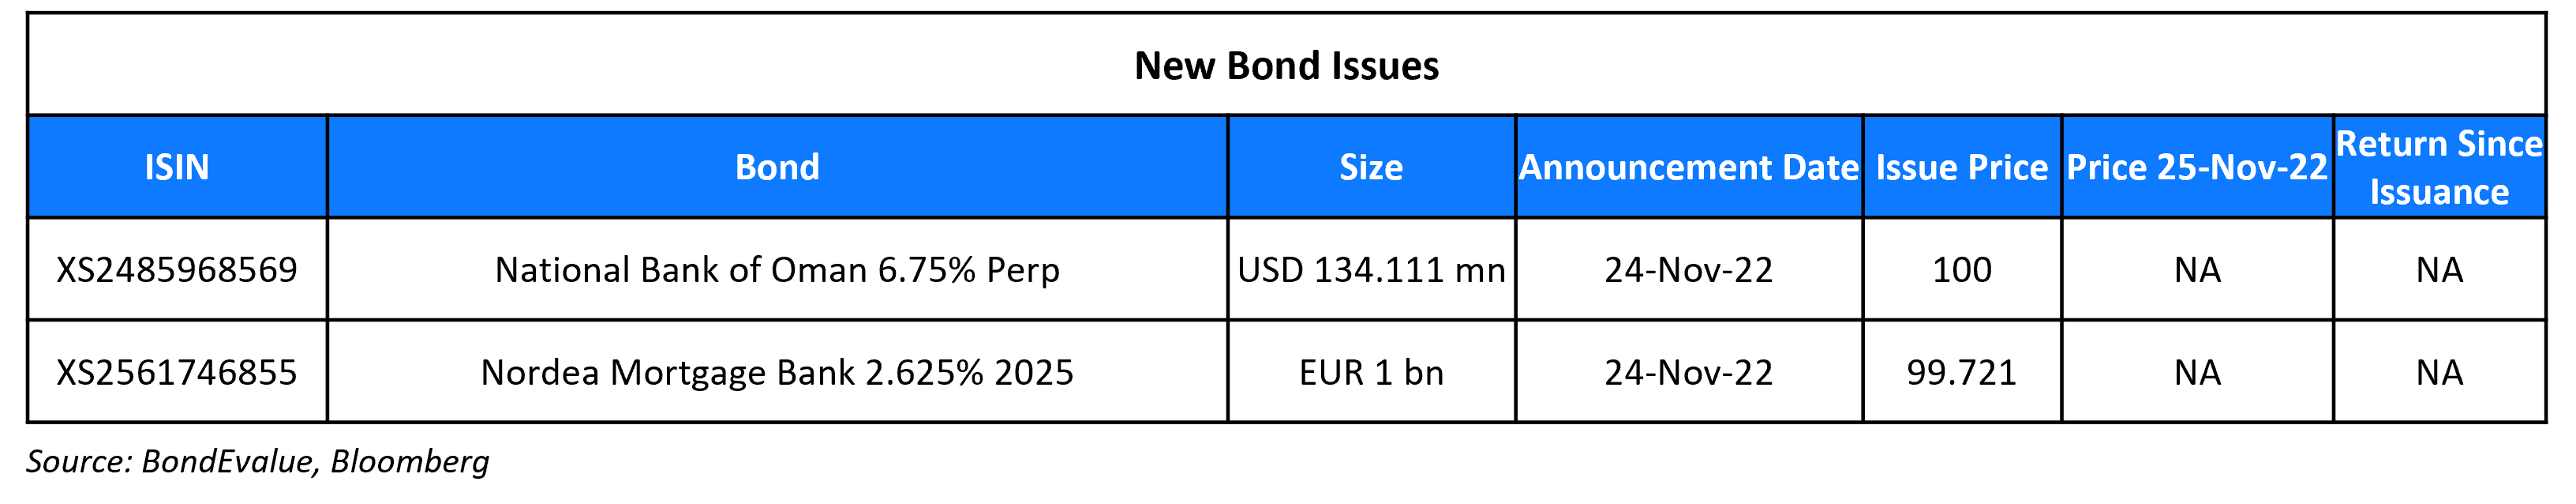 New Bond Issues 25 Nov 22